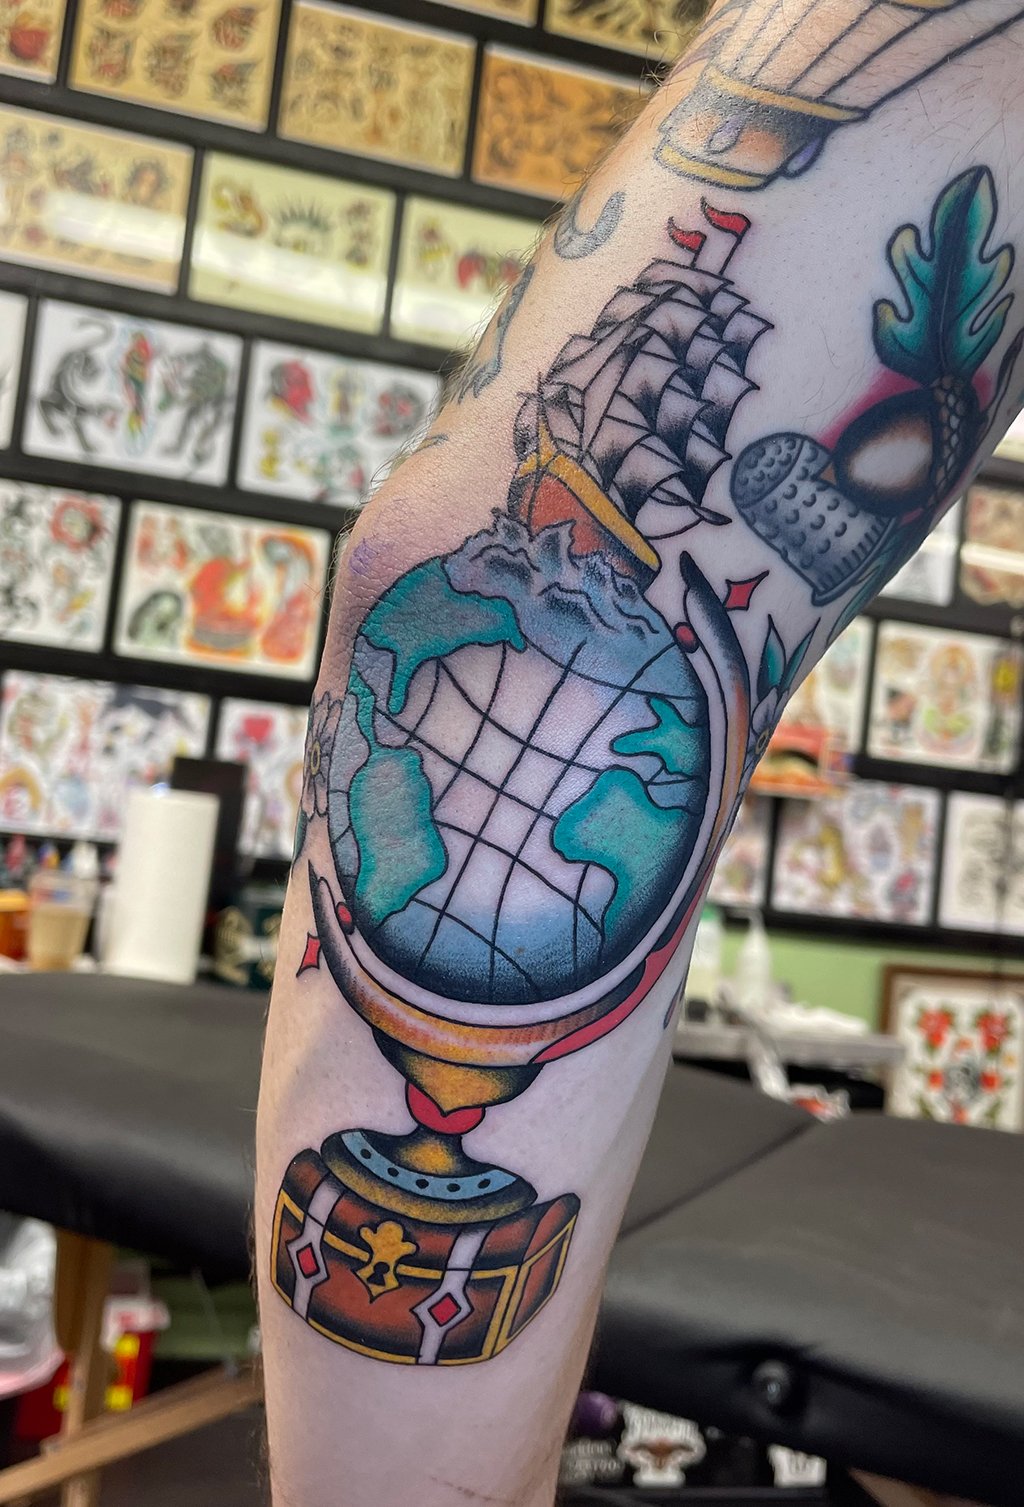 KyleNorcross_ShipOnGlobe_tattoo.jpg